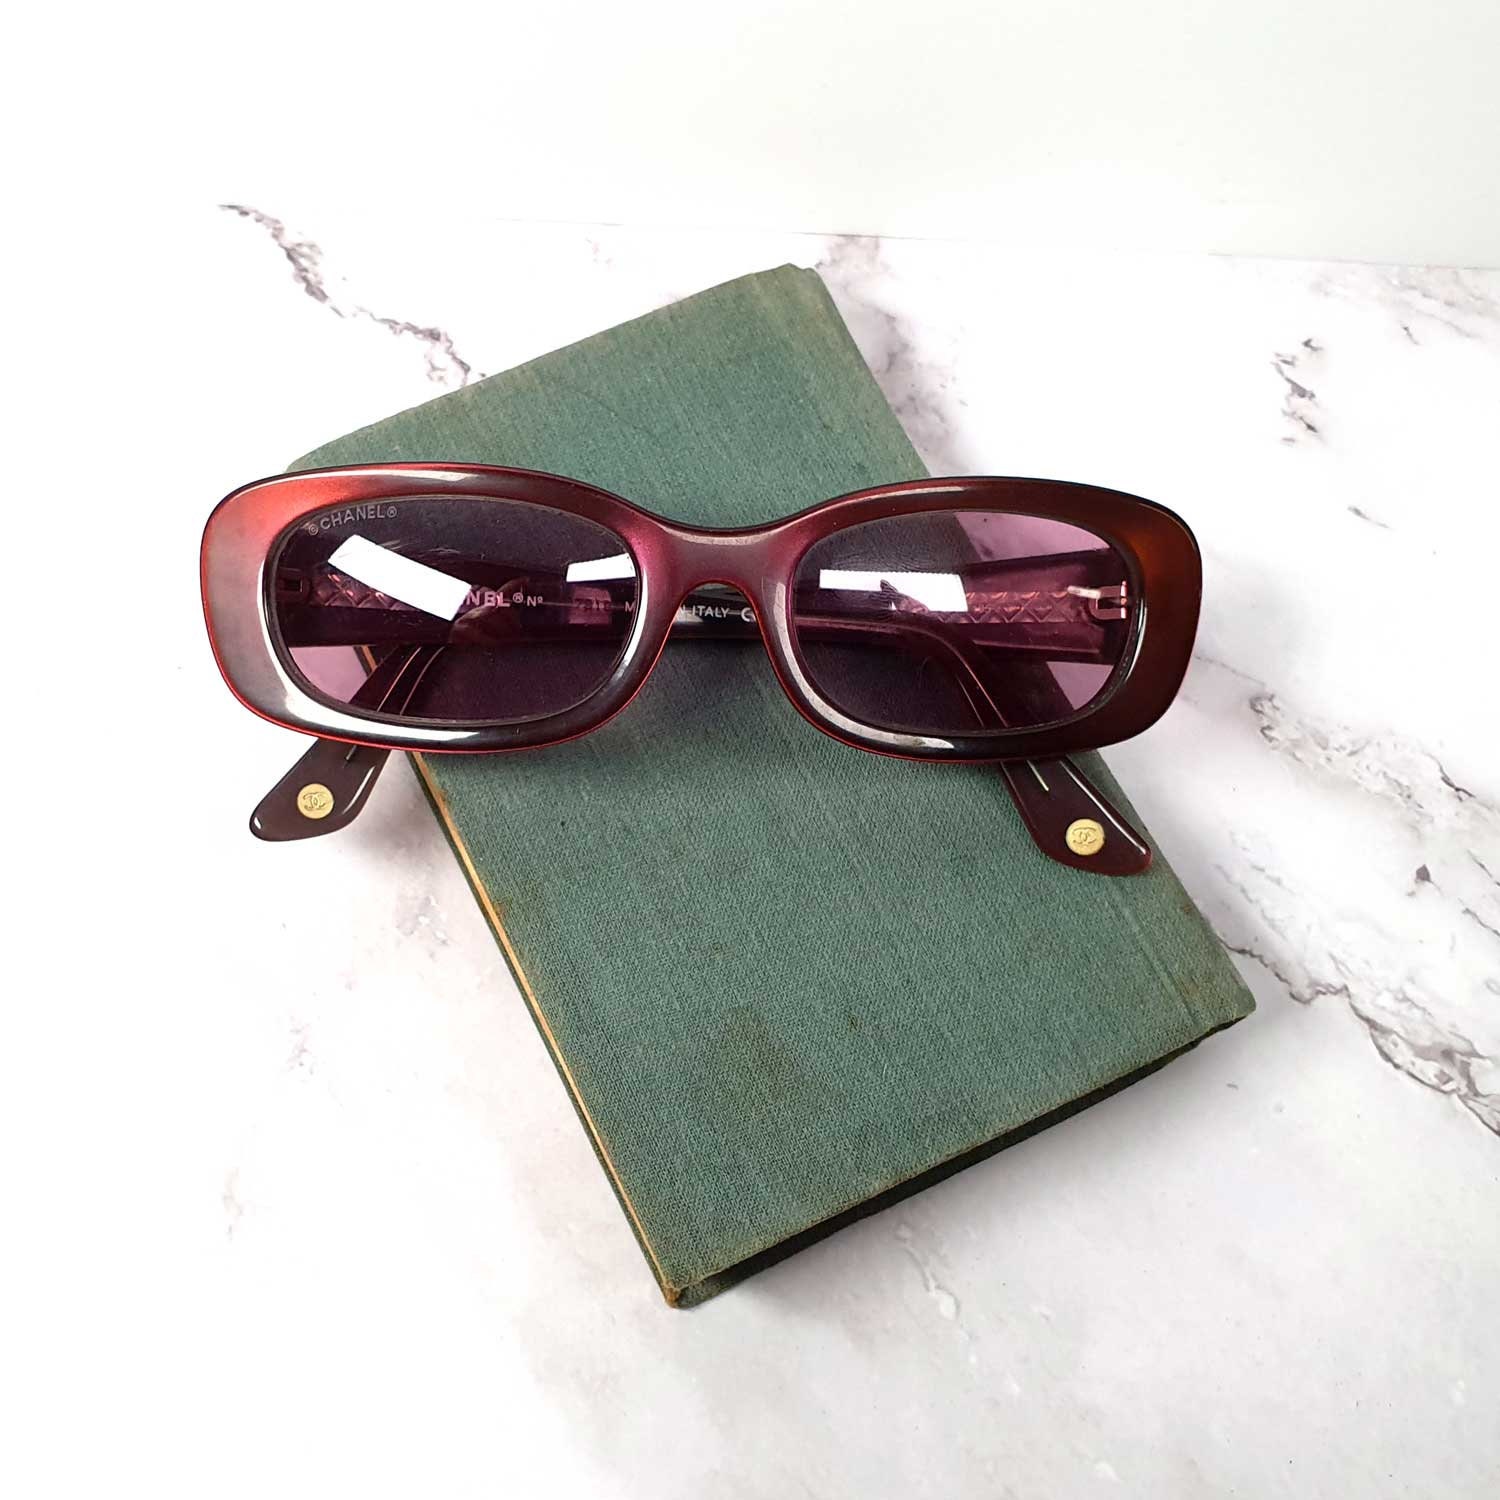 CHANEL sunglasses vintage rare oval red cherry frame … - Gem